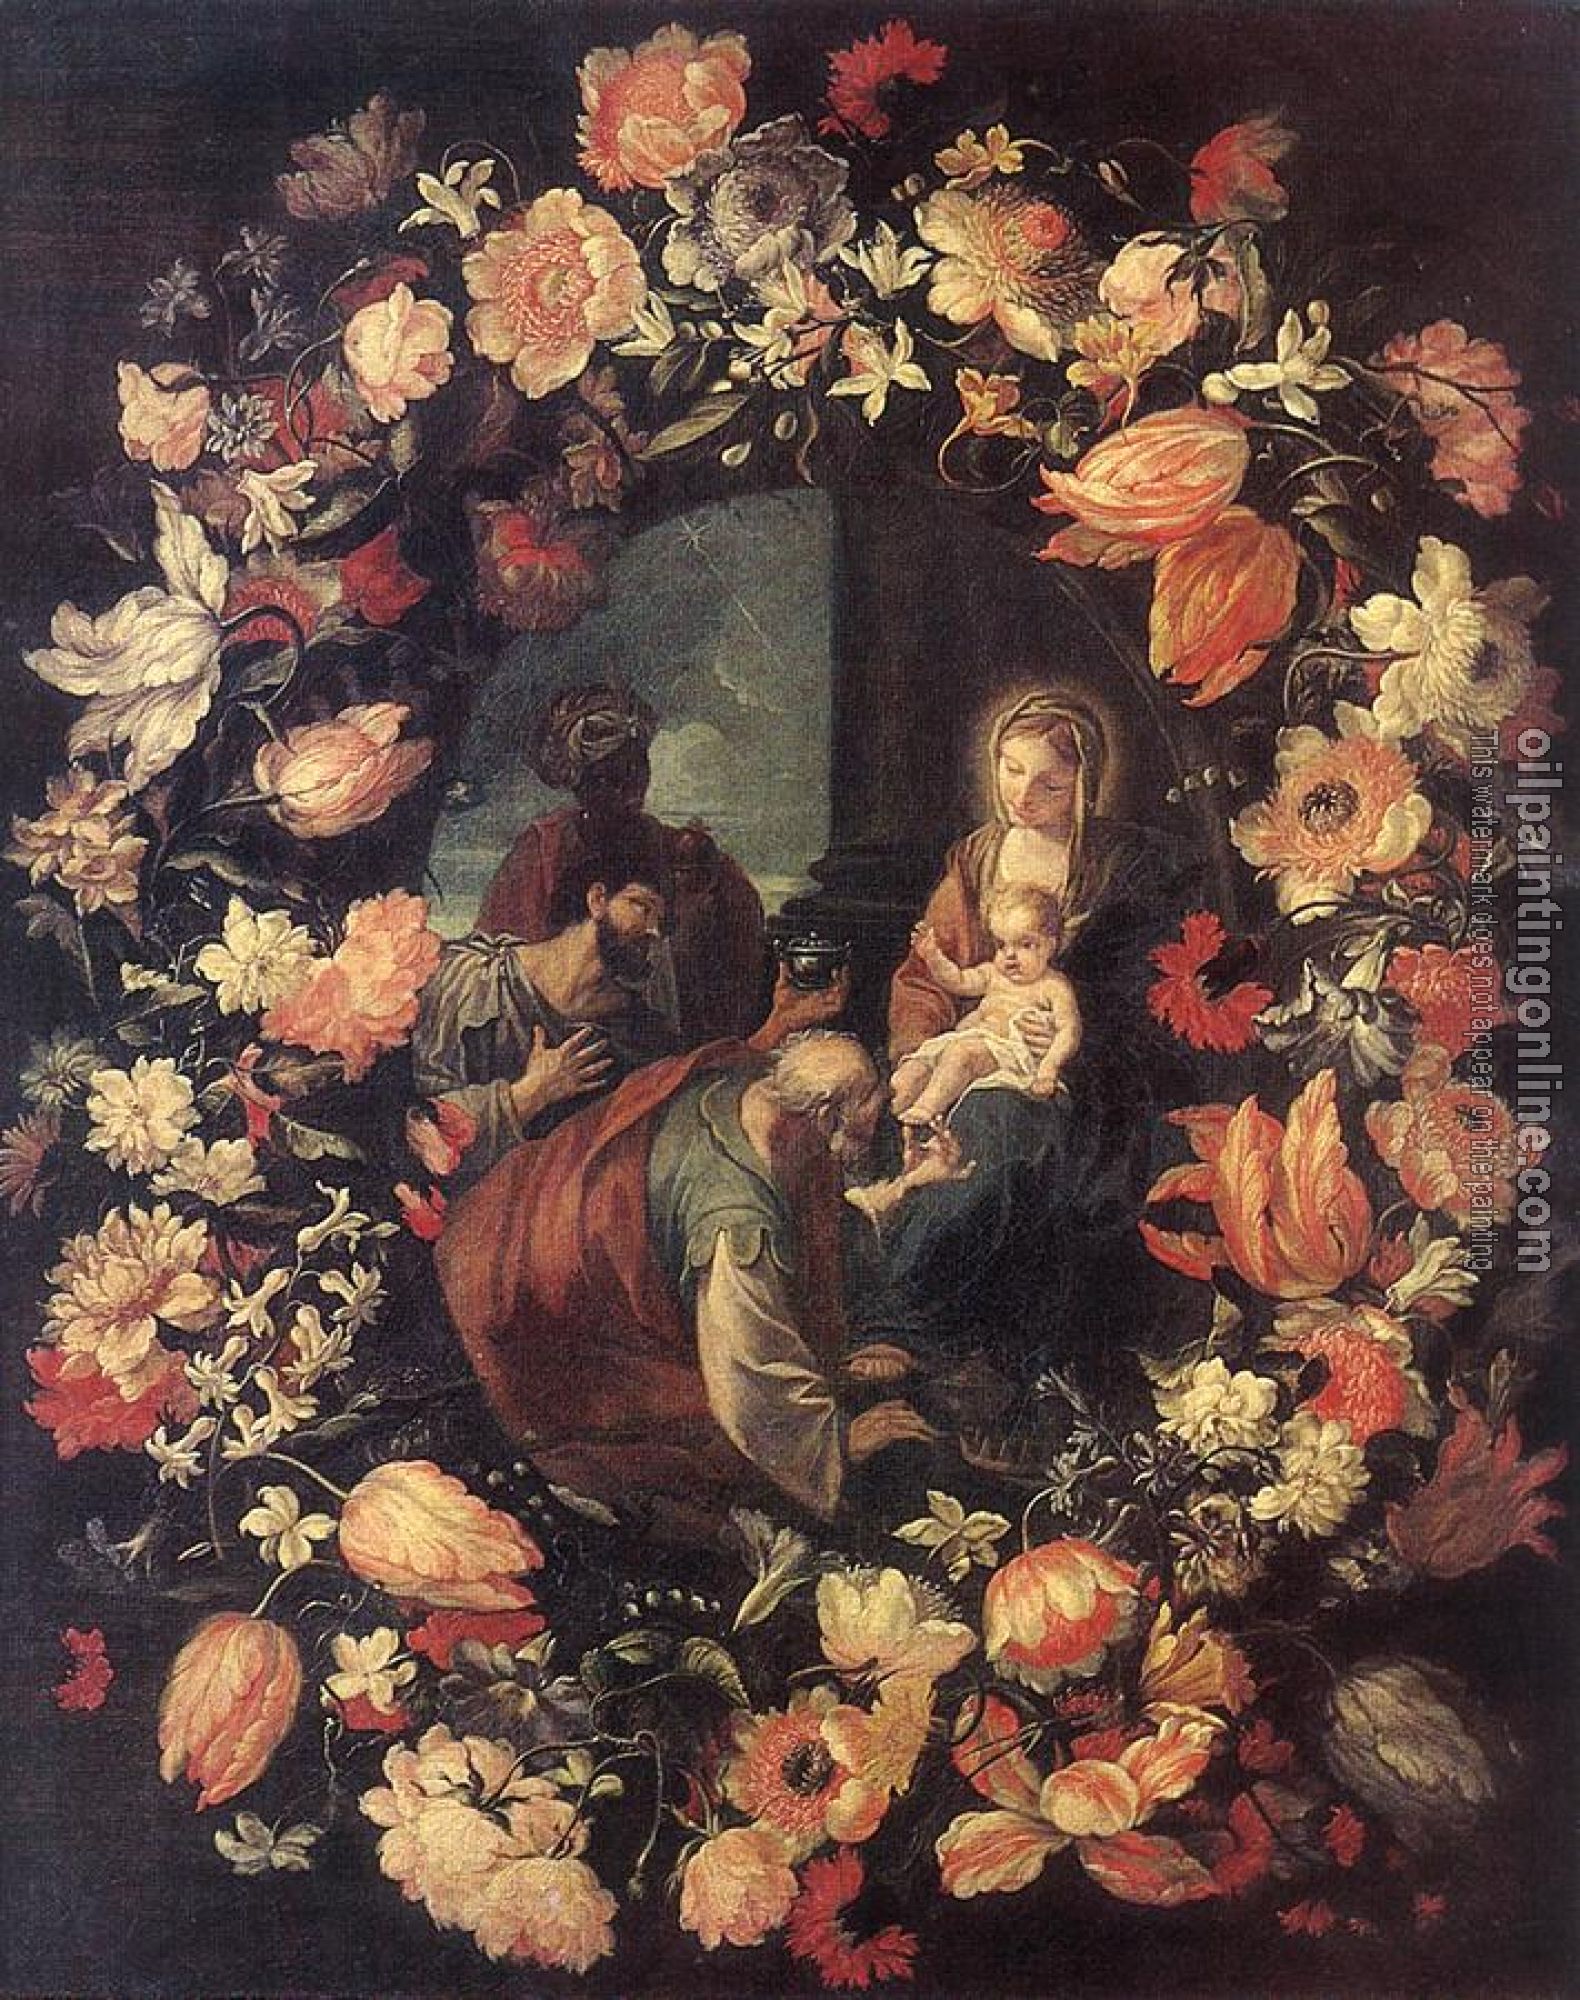 Maratta, Carlo - Adoration of the Magi